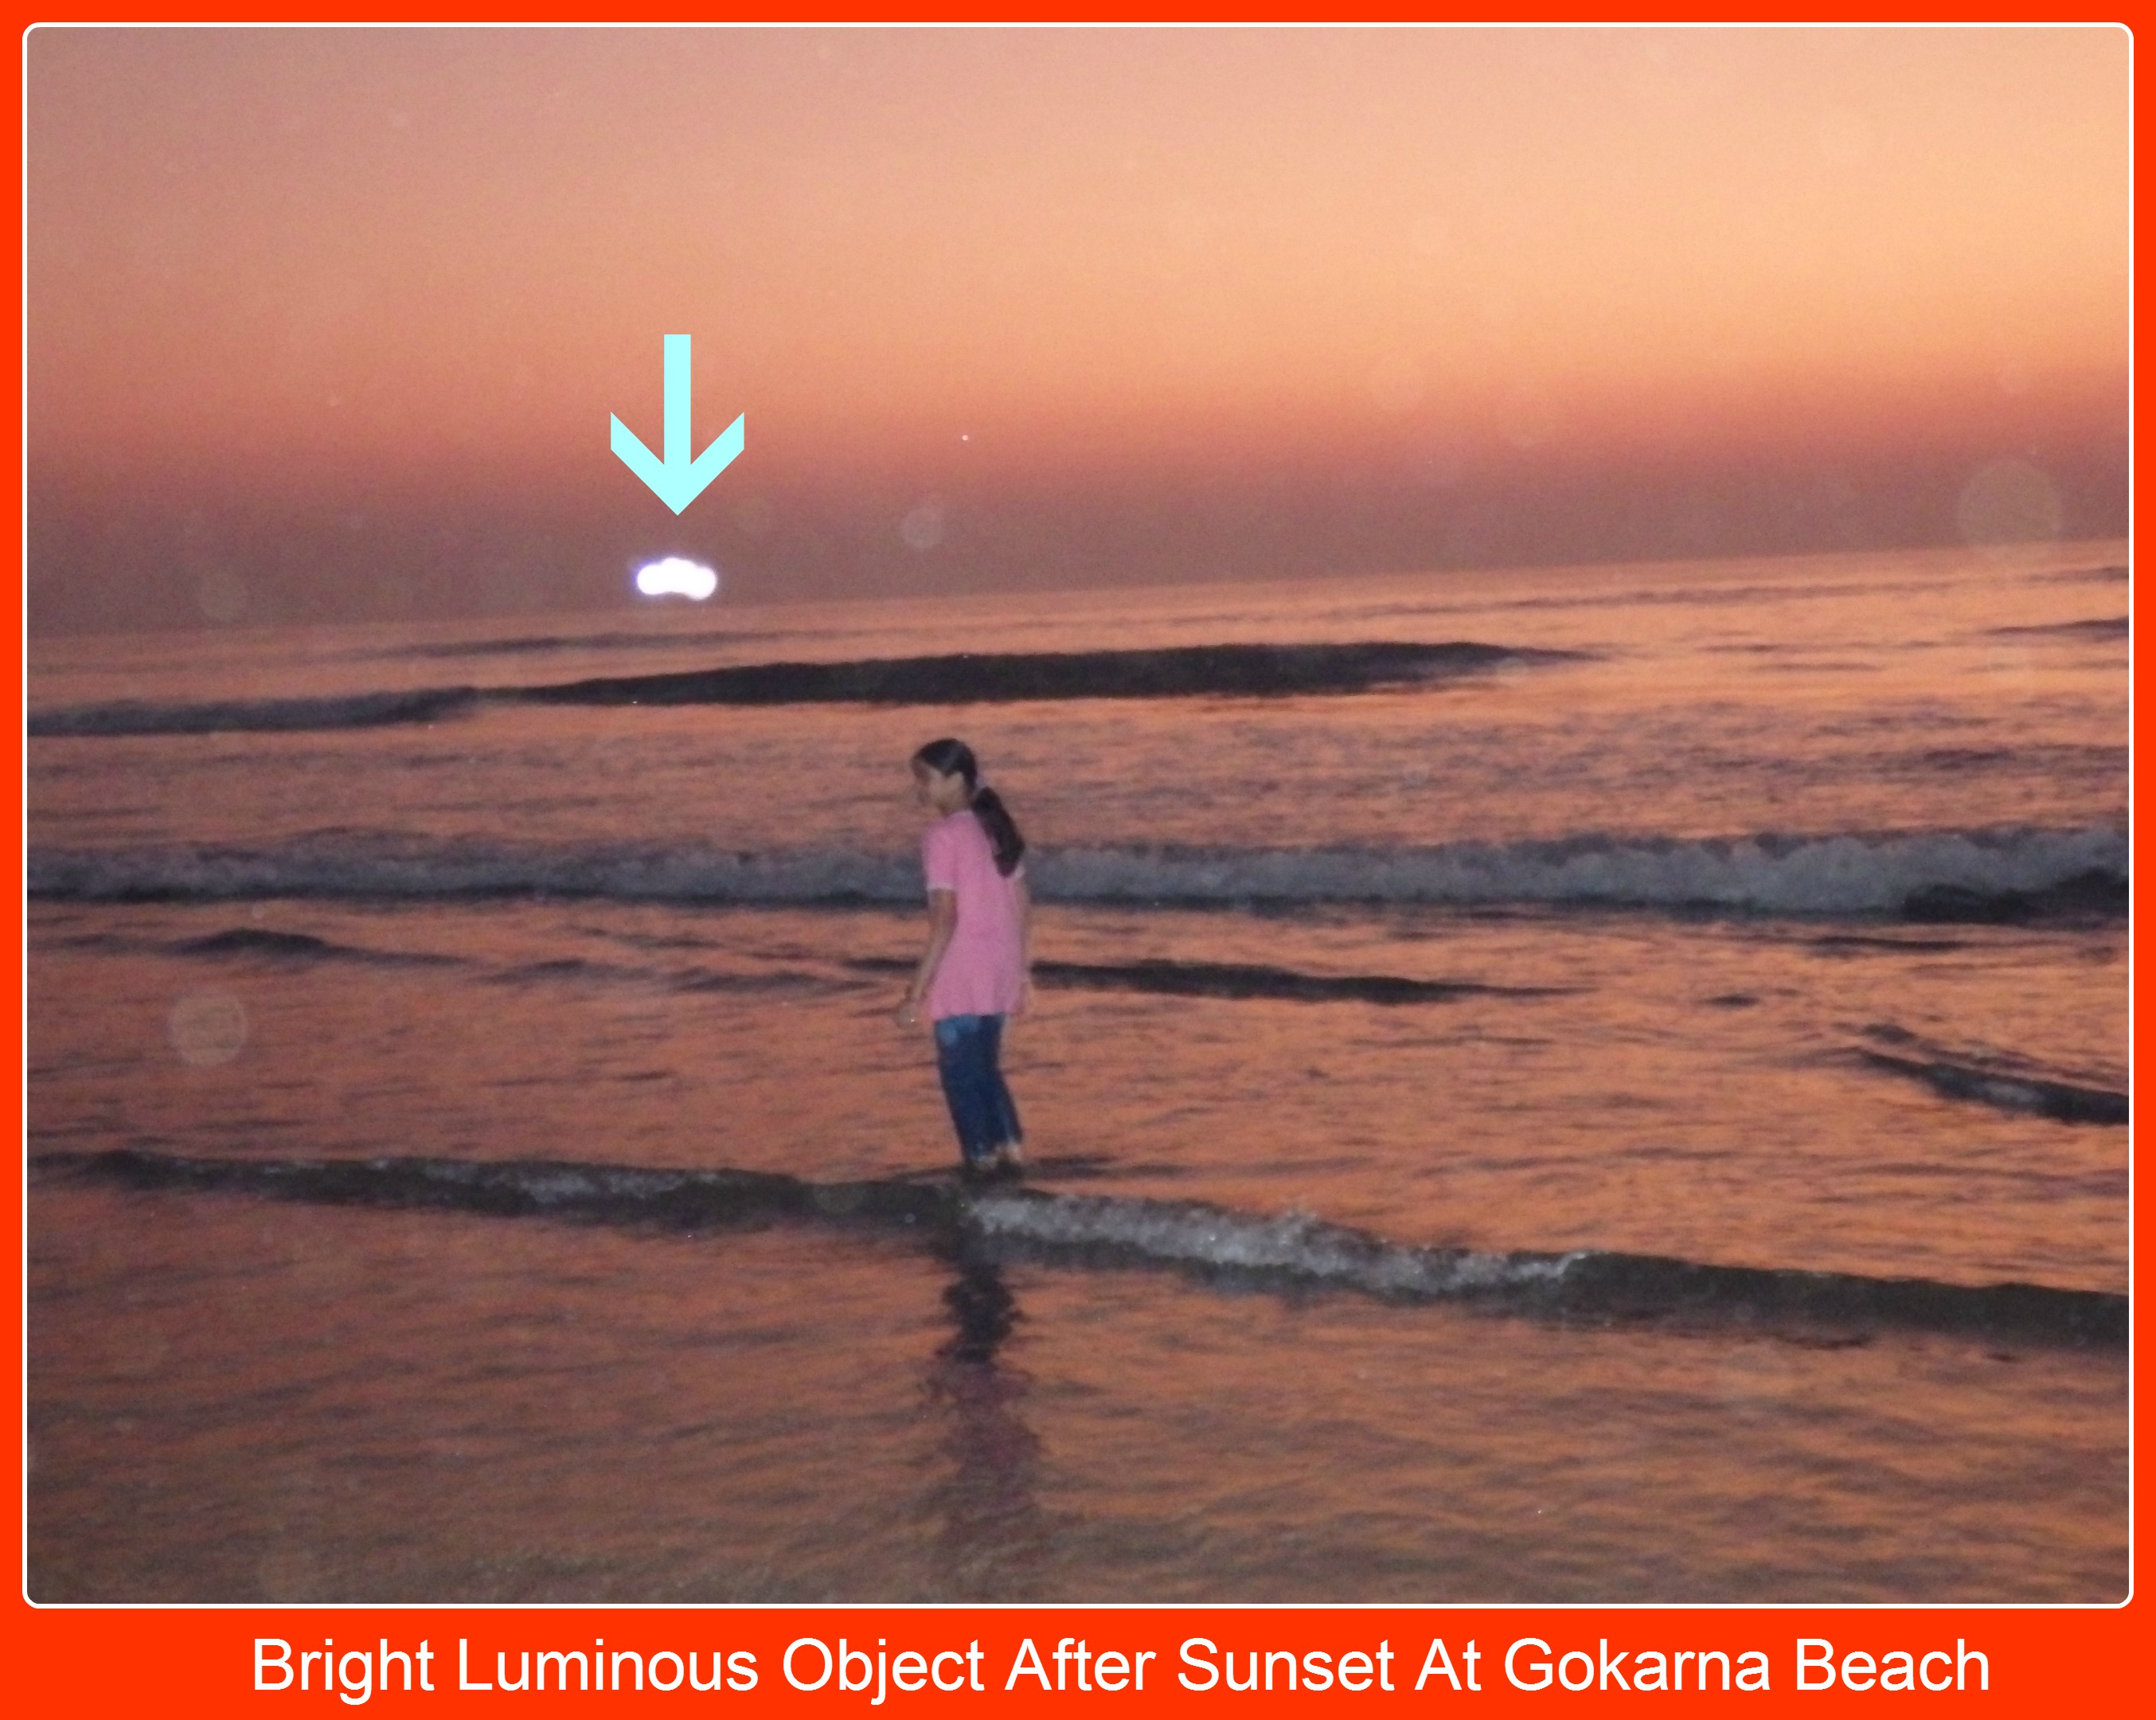 Gokarna Beach With Mistirious Luminous Object